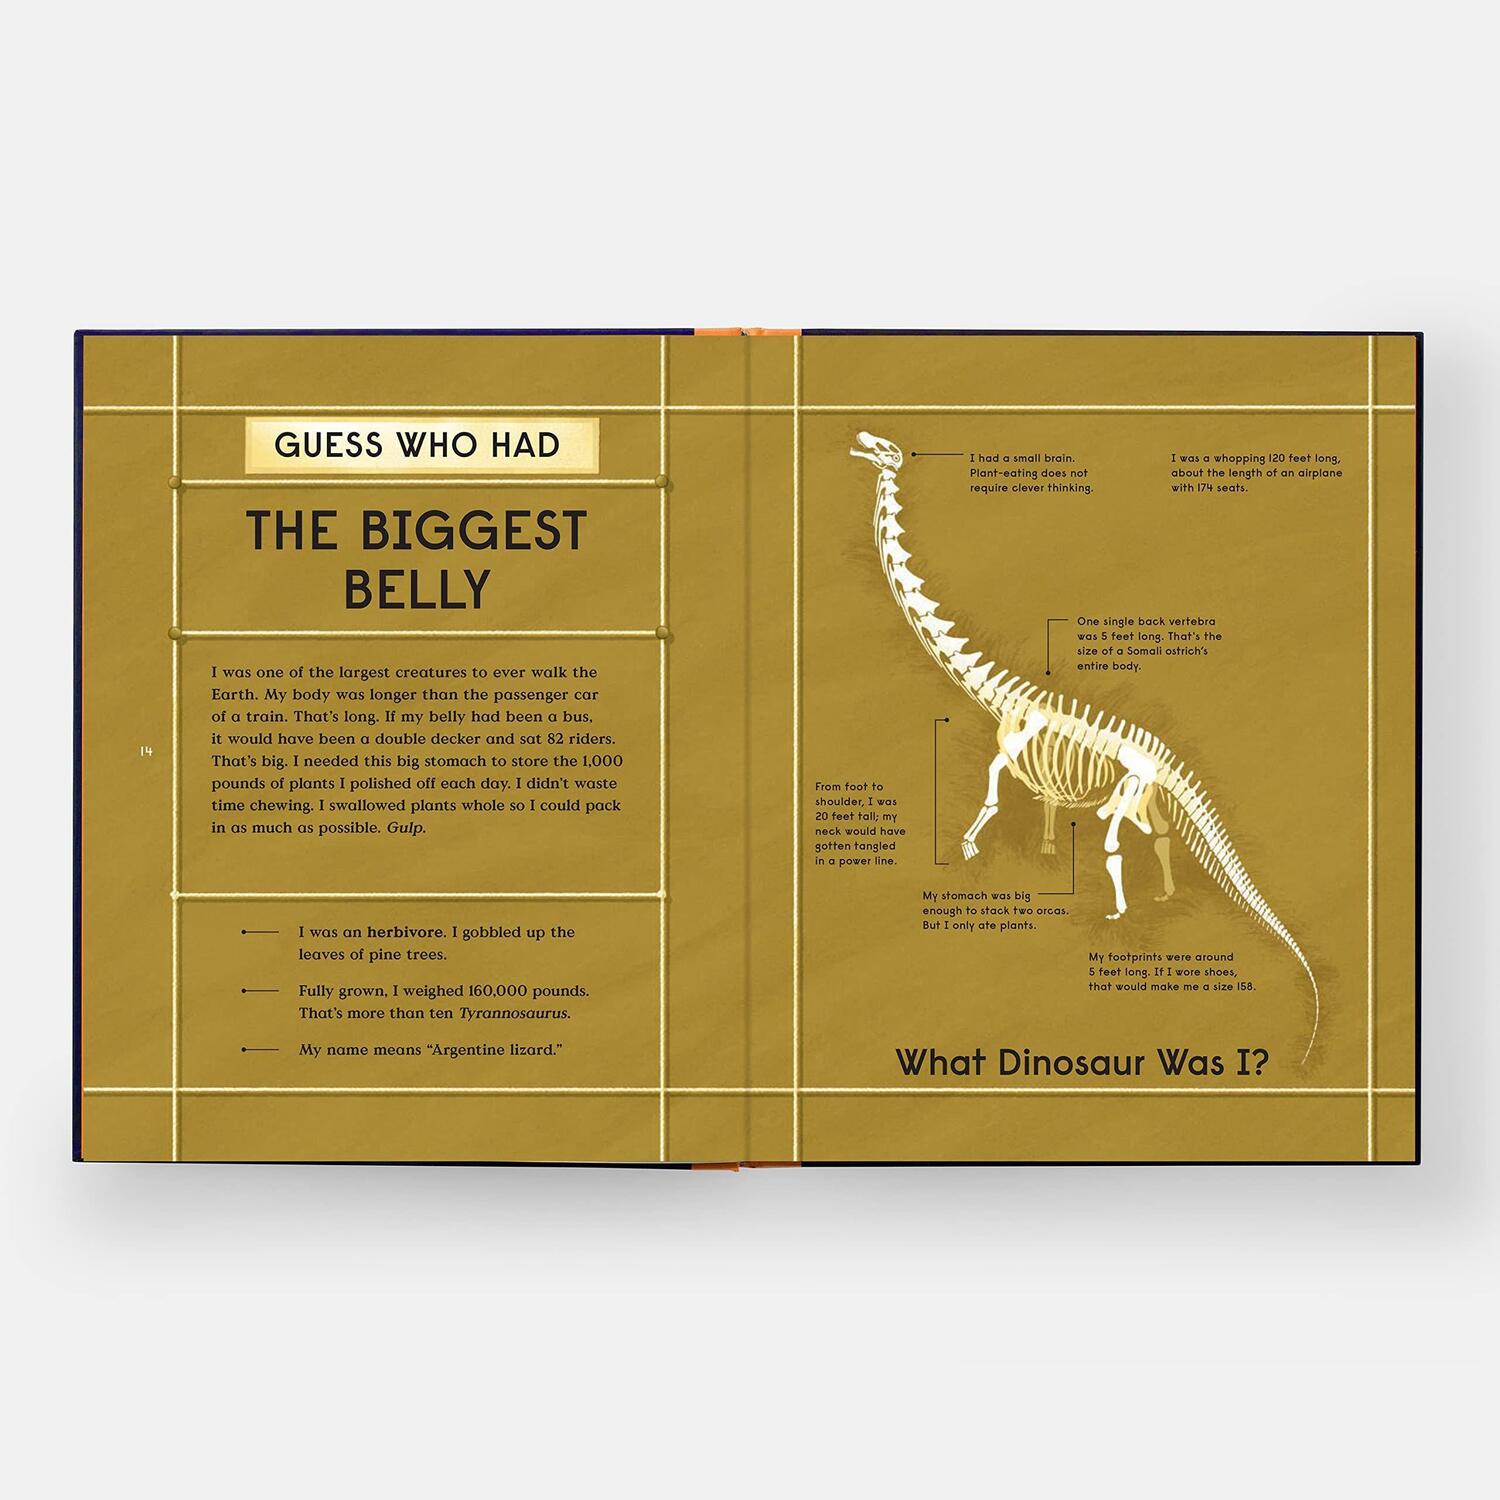 Bild: 9781838664251 | Book of Dinosaurs | 10 Record-Breaking Prehistoric Animals | Balkan